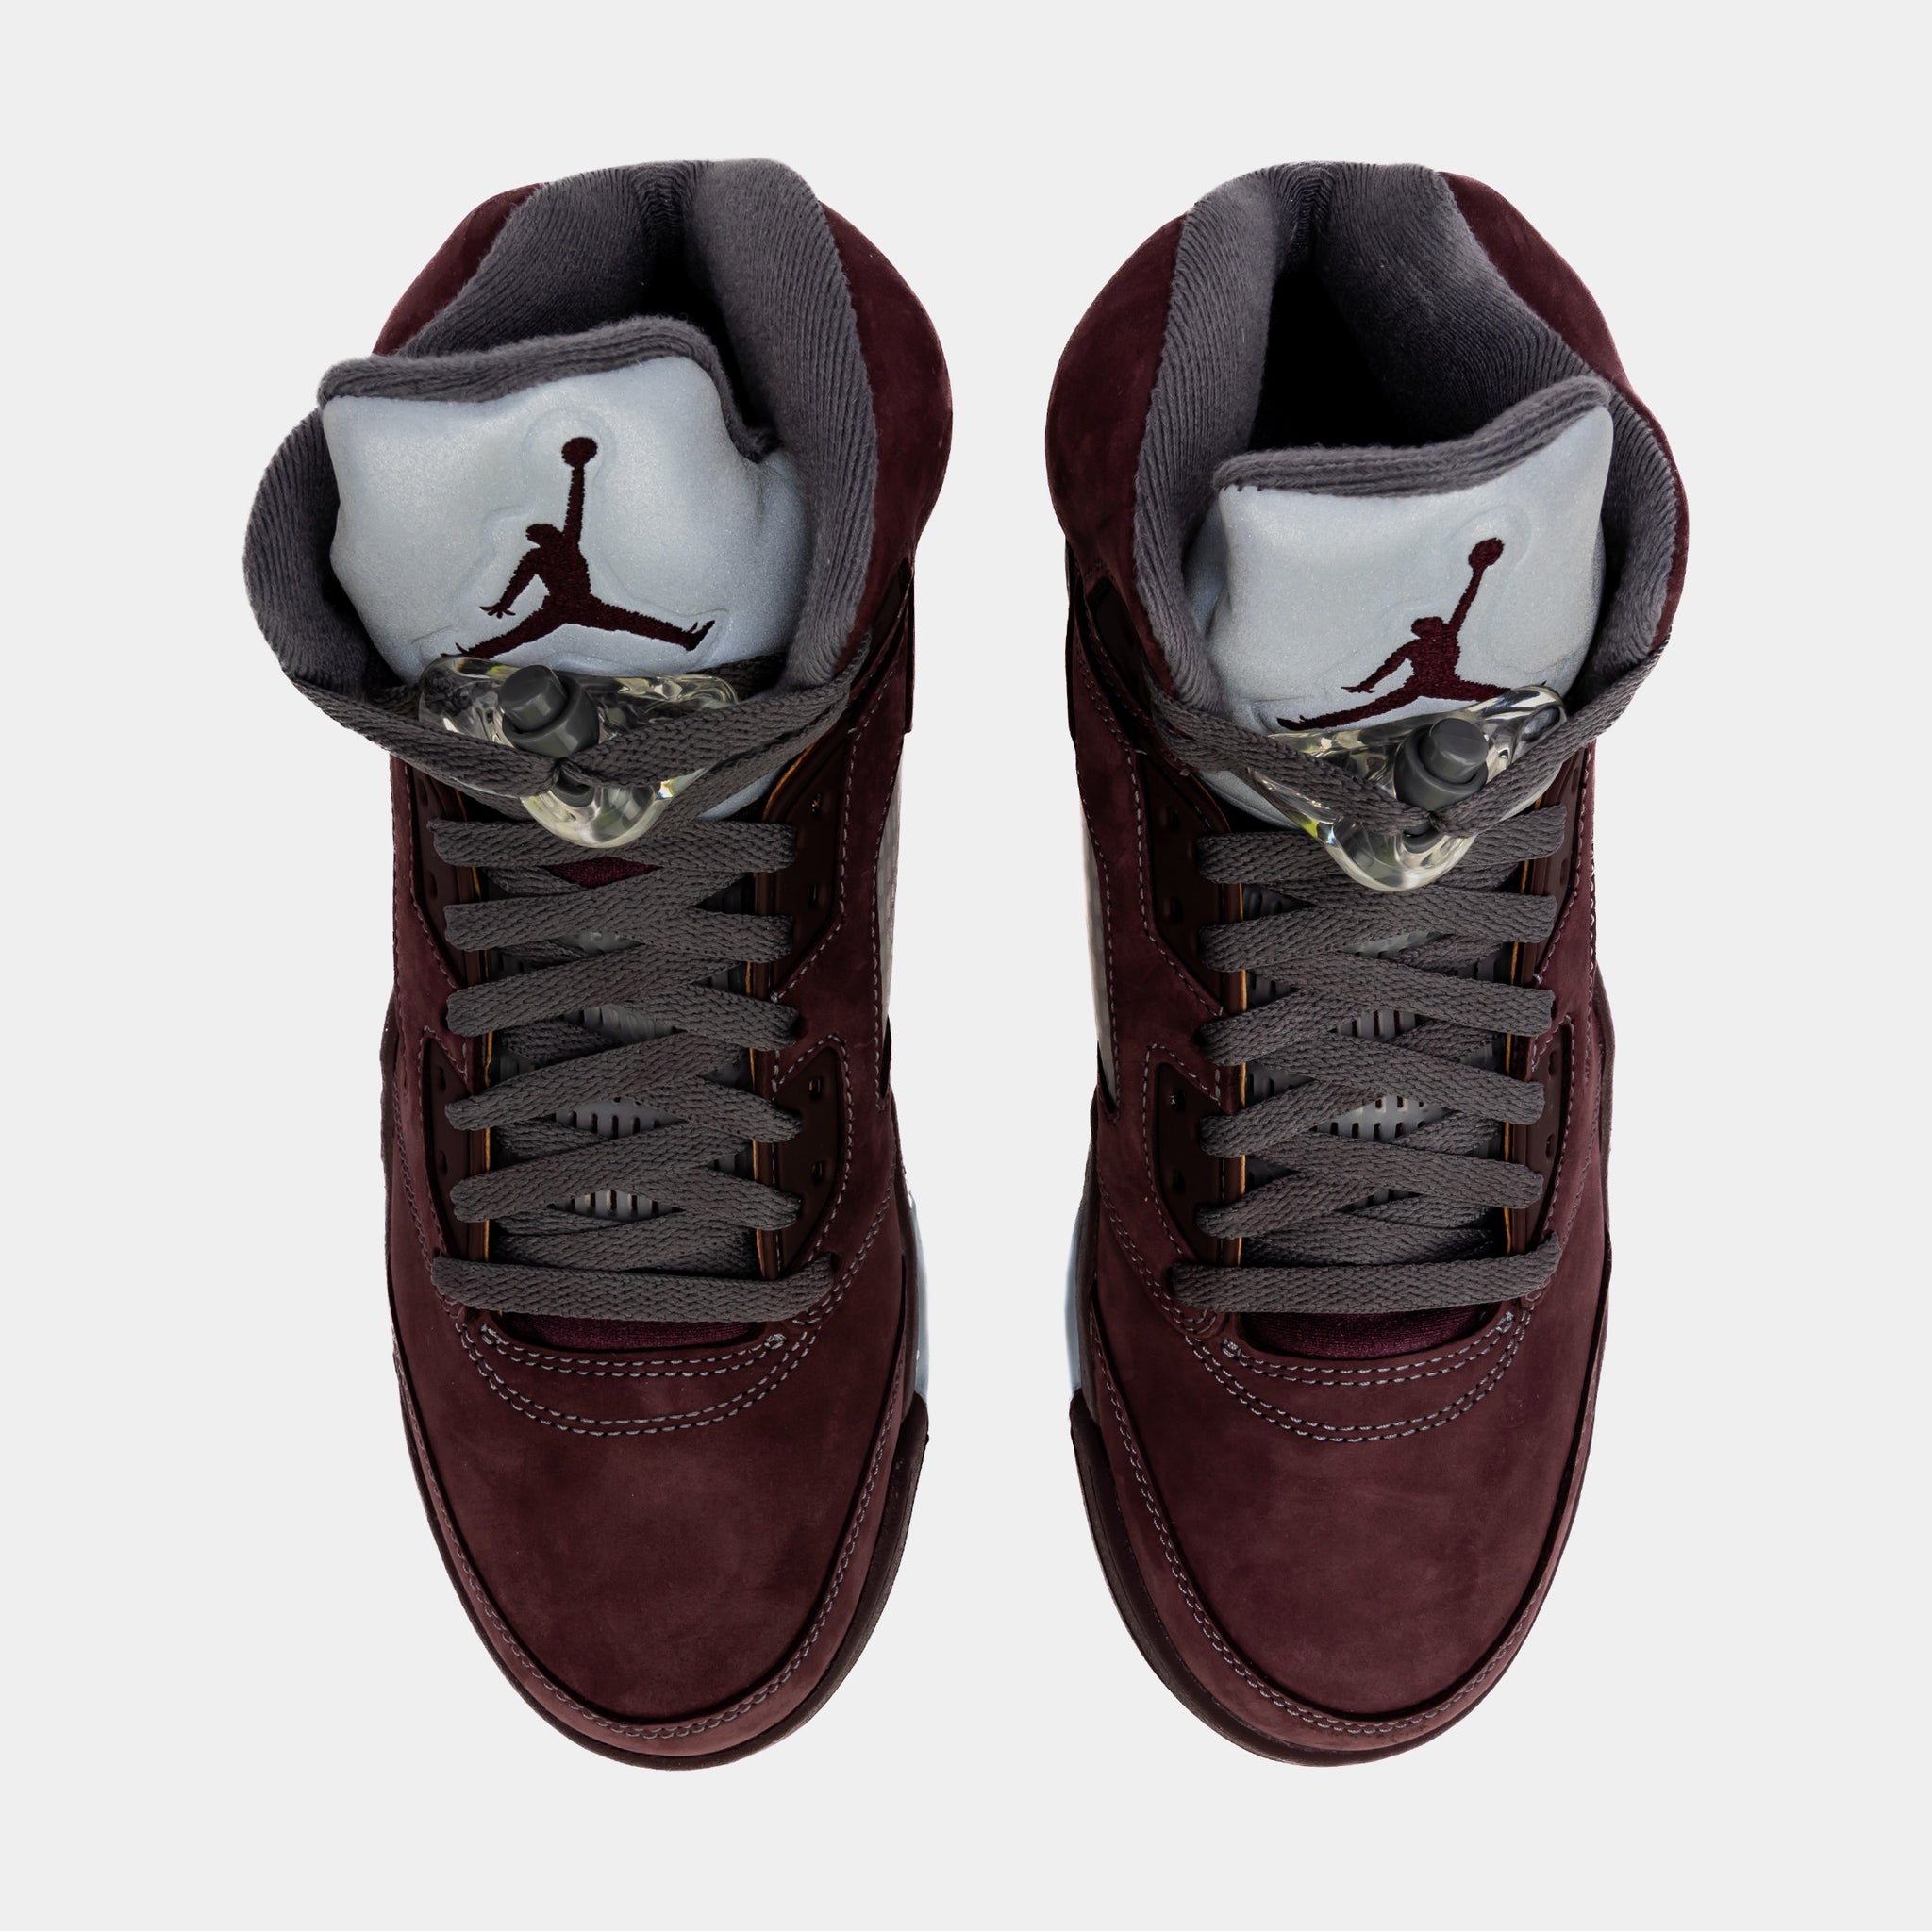 Jordan Air Jordan 5 Retro Burgundy Mens Lifestyle Shoes Burgundy